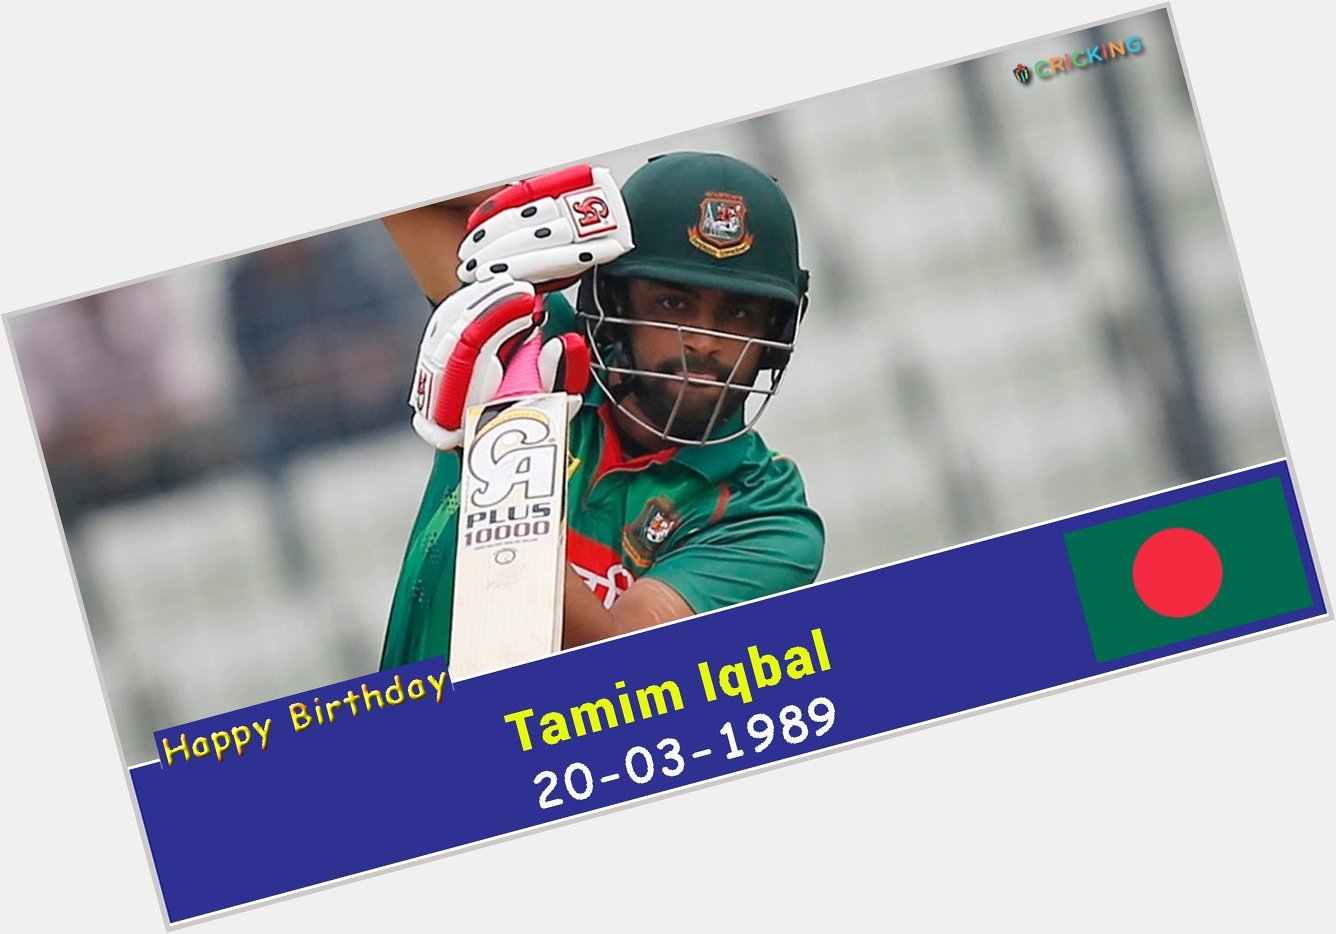 Happy Birthday Tamim Iqbal. The Bangladesh cricketer turns 28 today.  